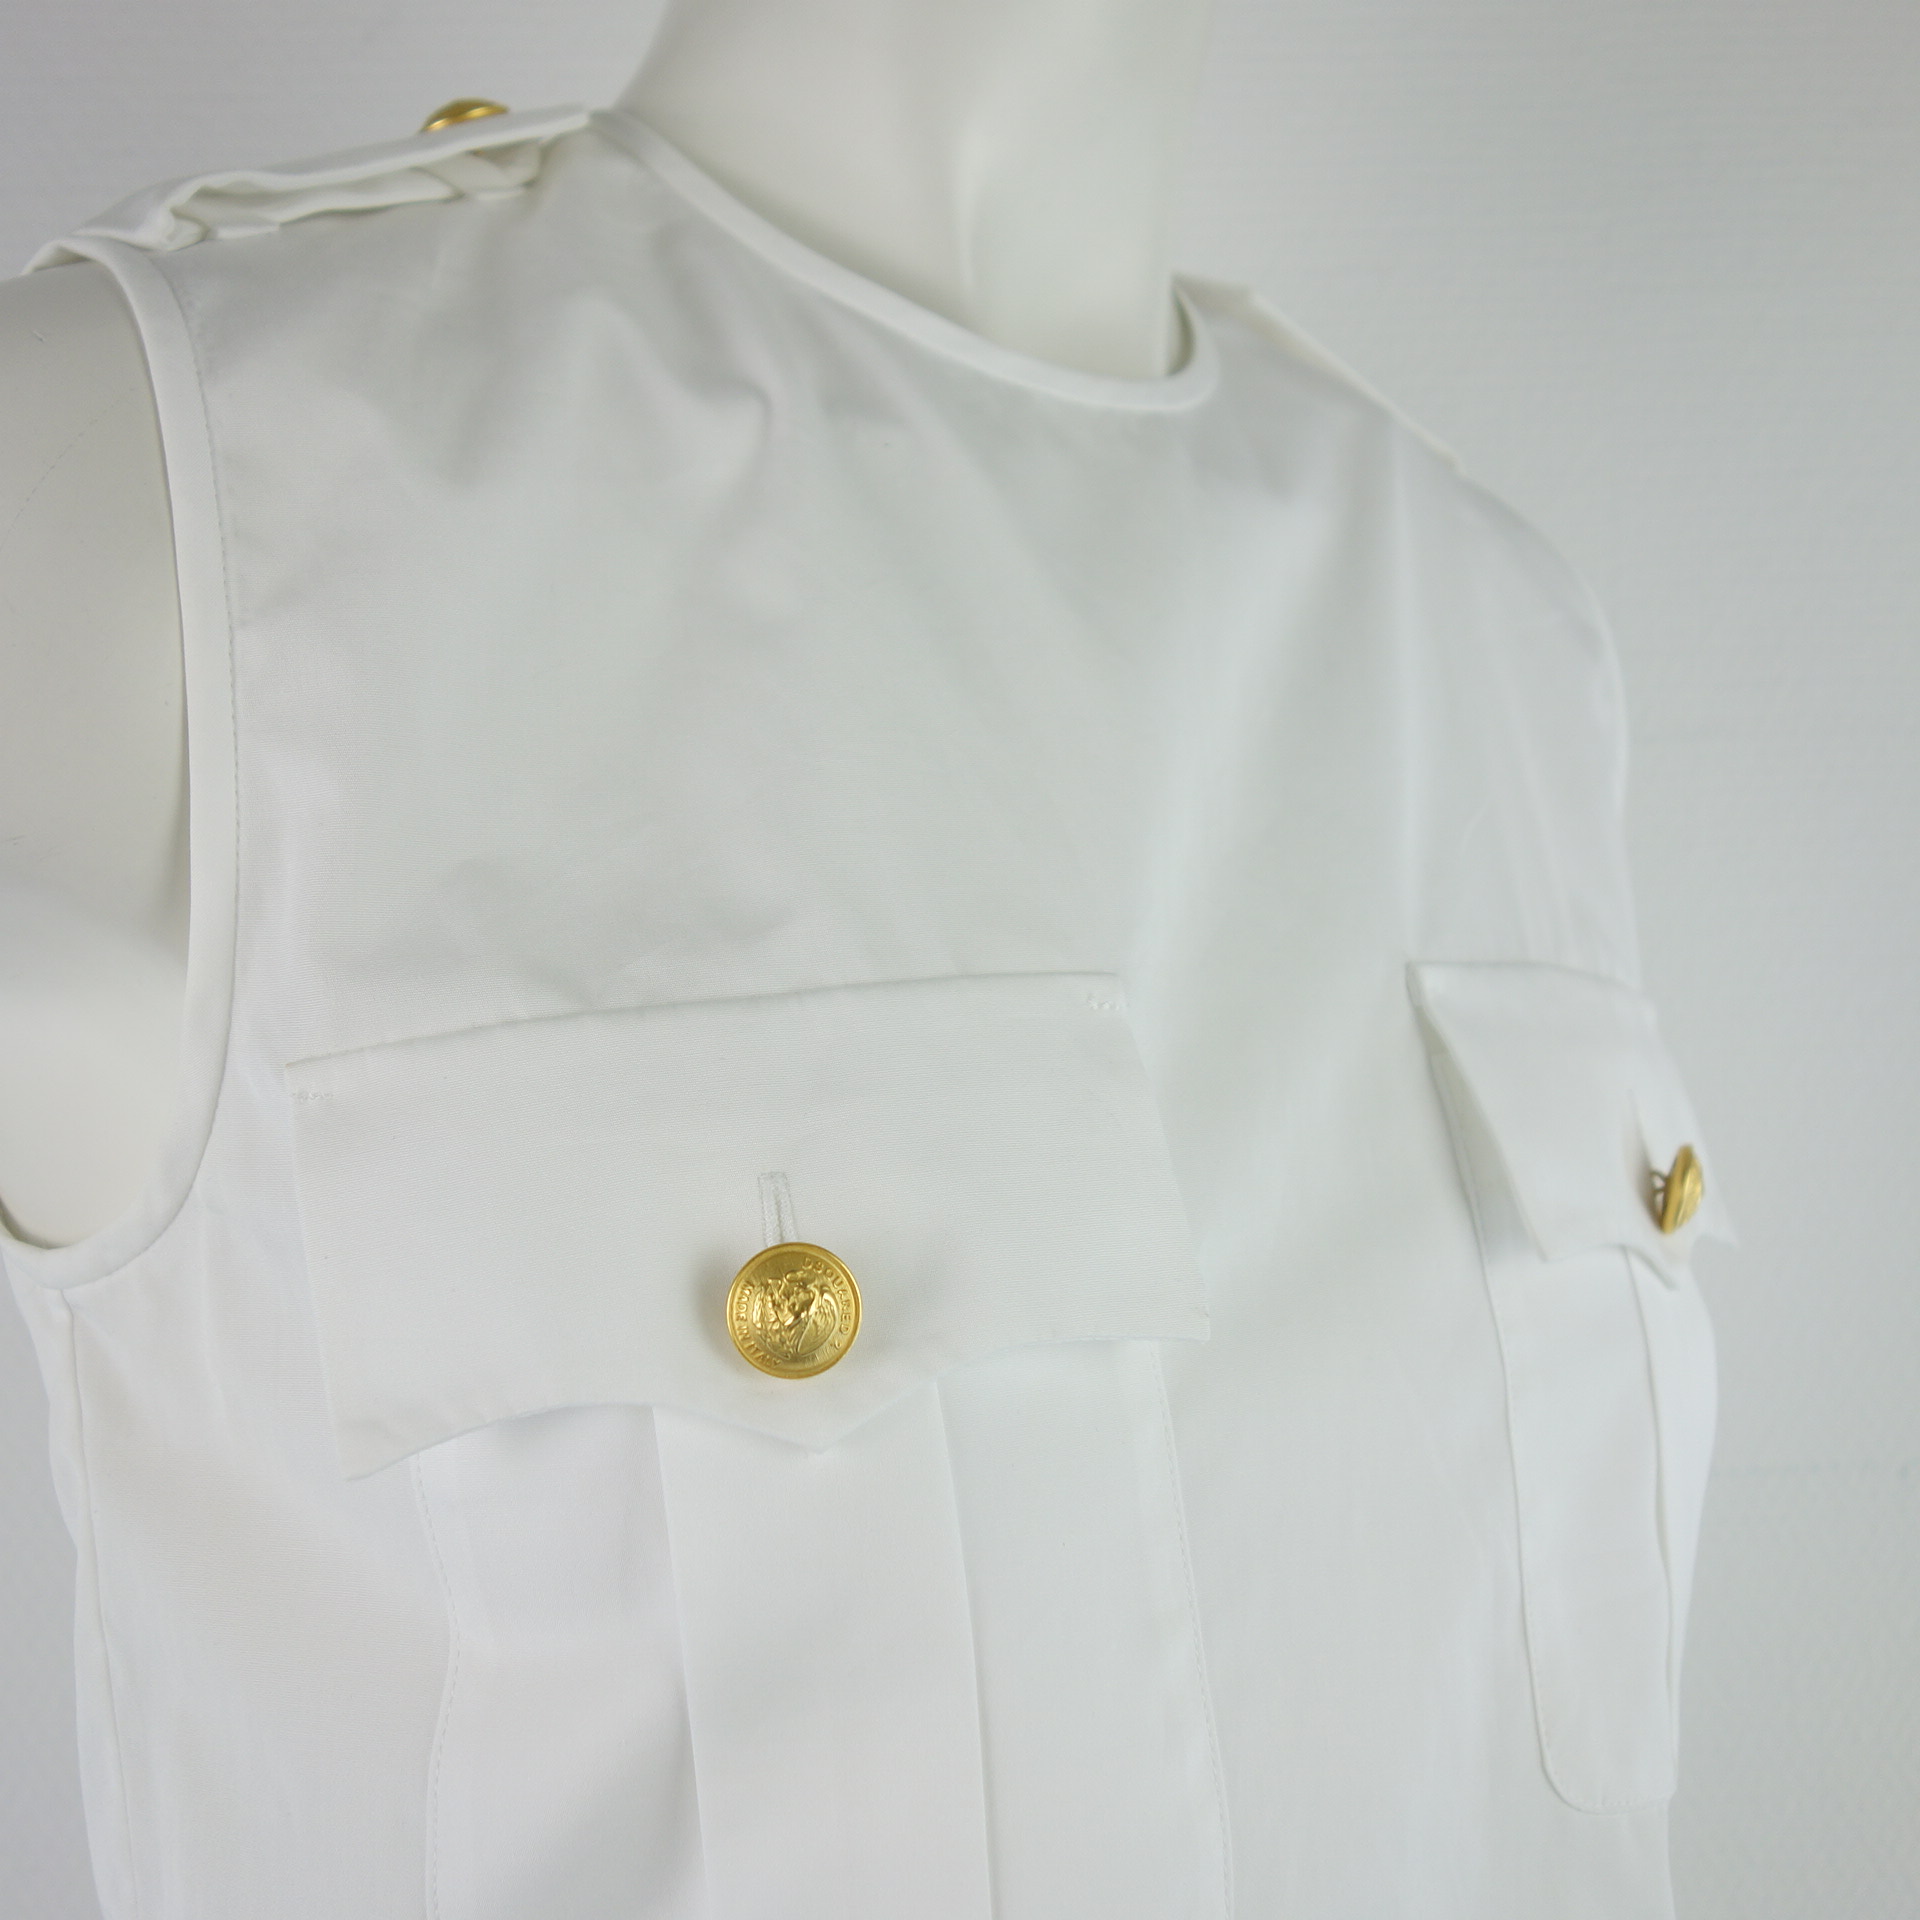 DSQUARED2 Dsquared 2 Damen Bluse Hemd Shirt Oberteil Tunika Weiß Baumwolle